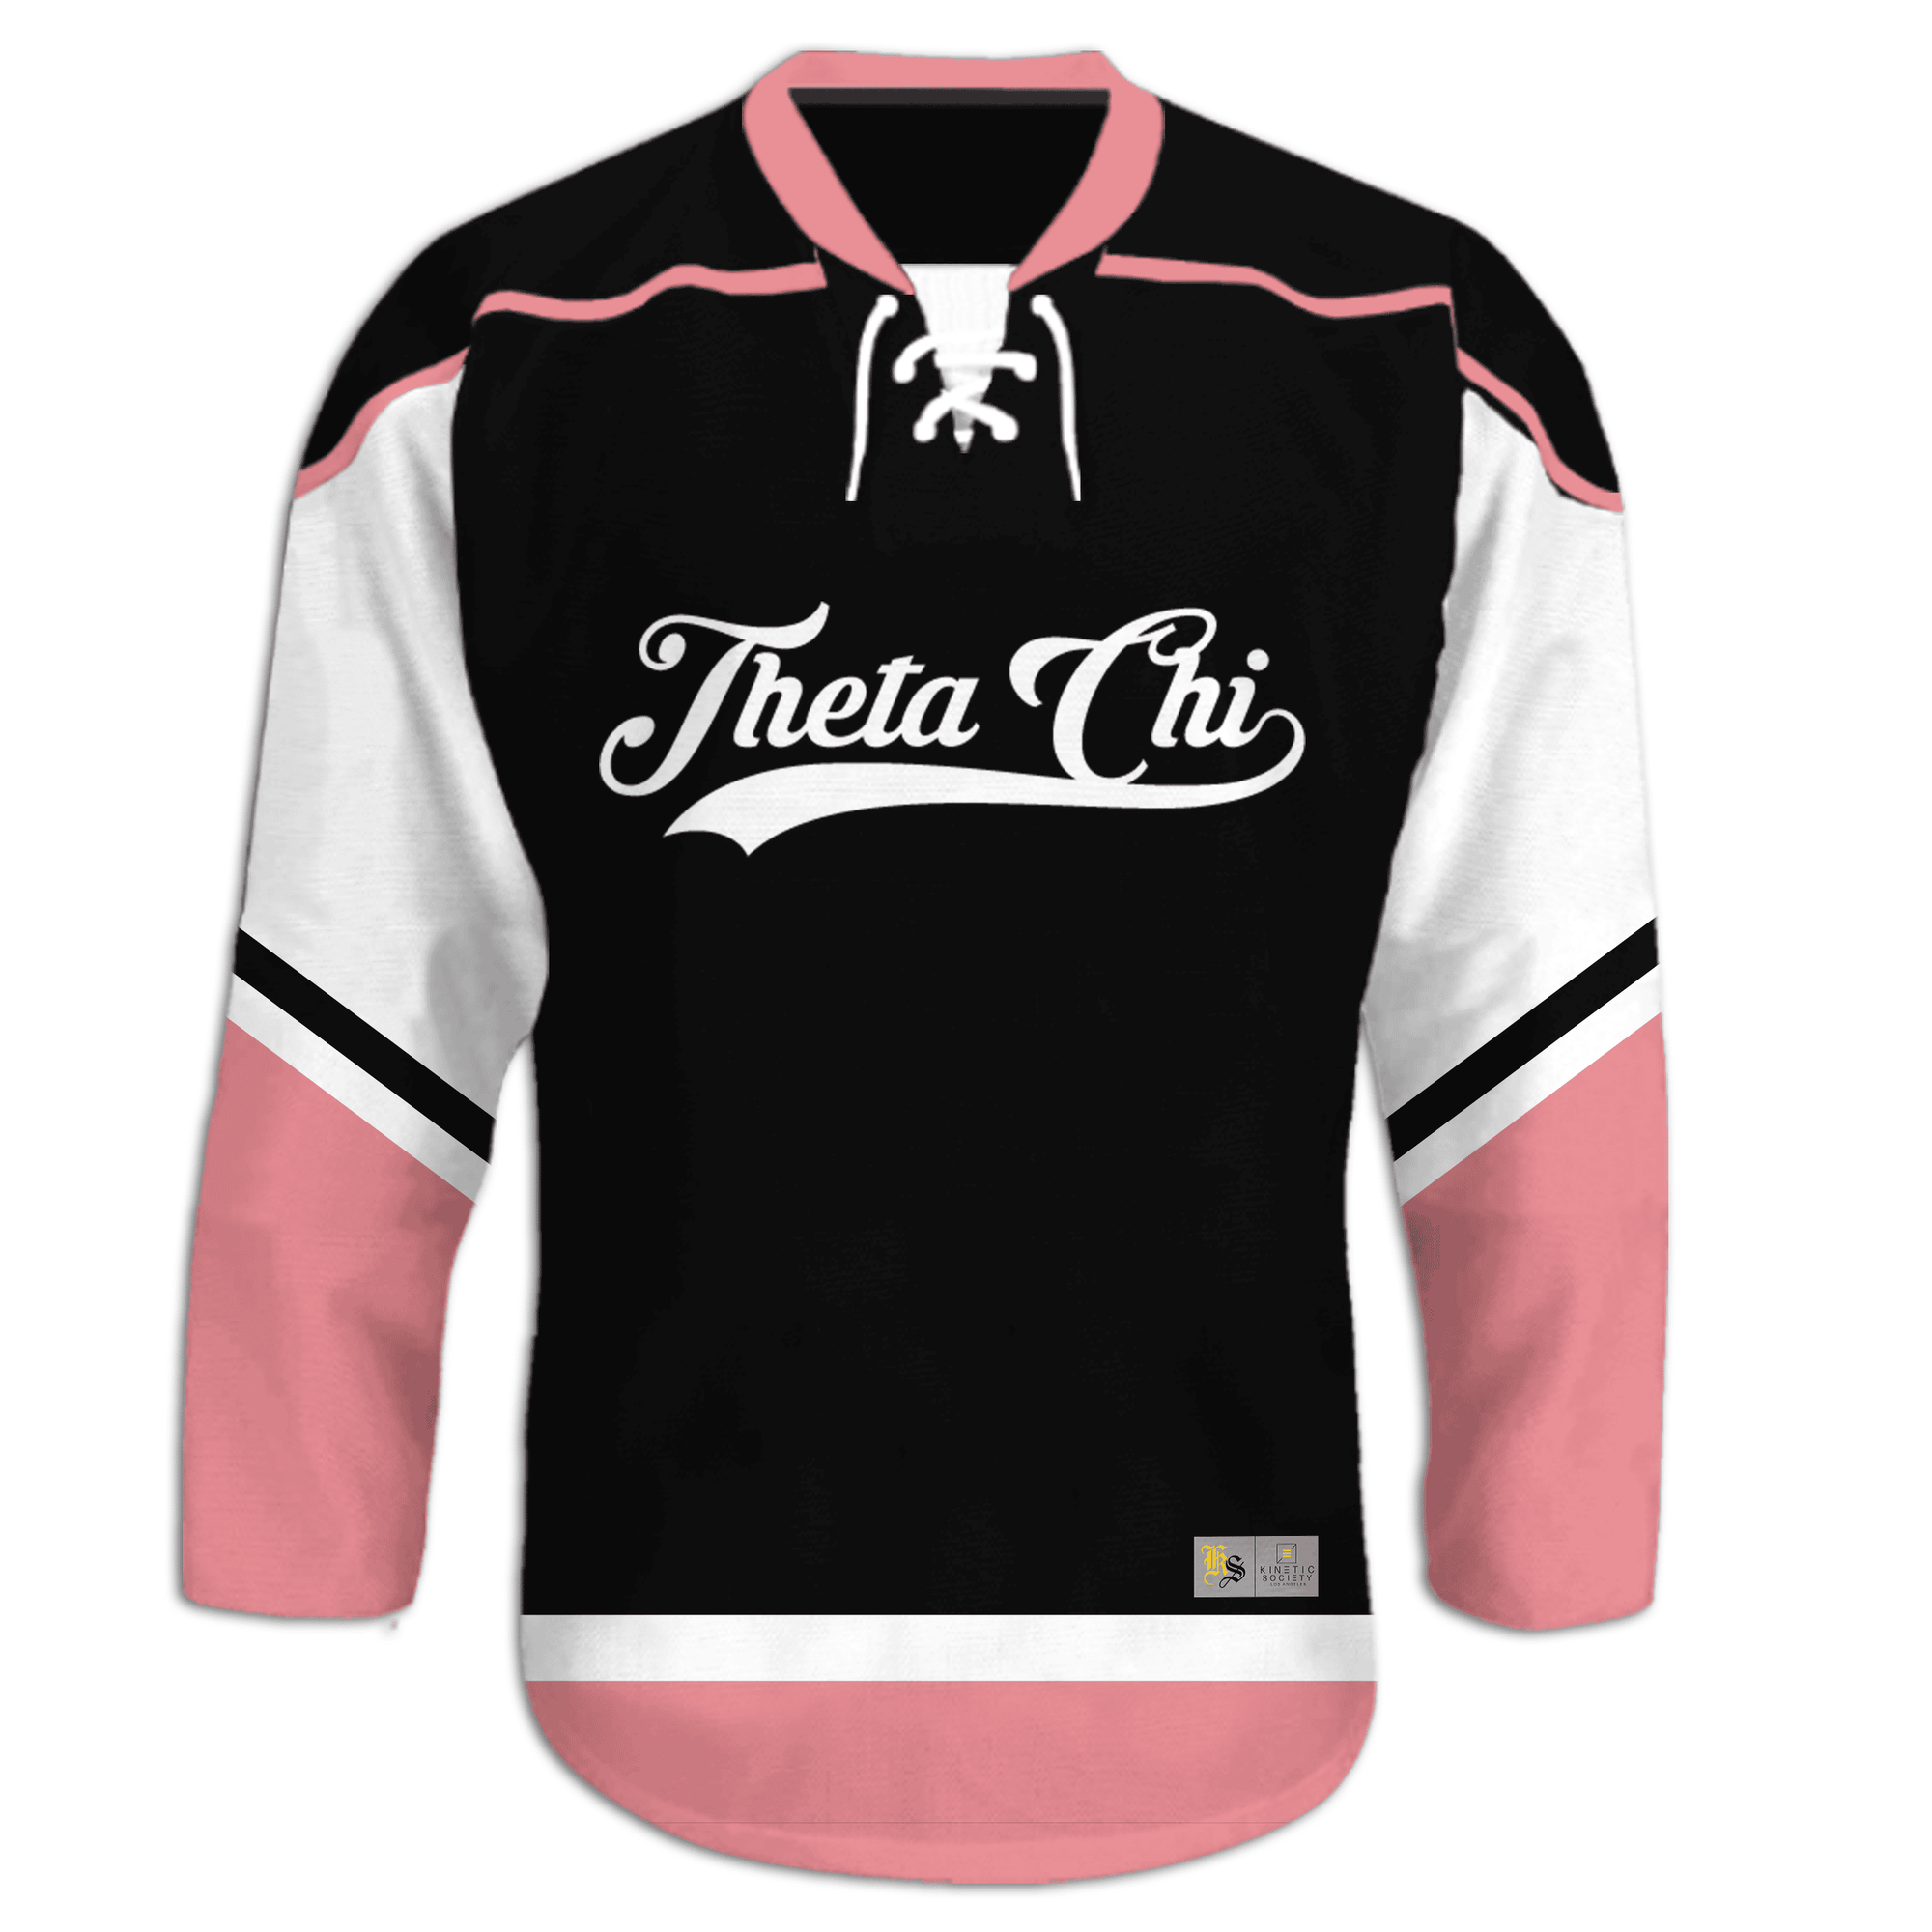 Theta Chi - Black Pink - Hockey Jersey